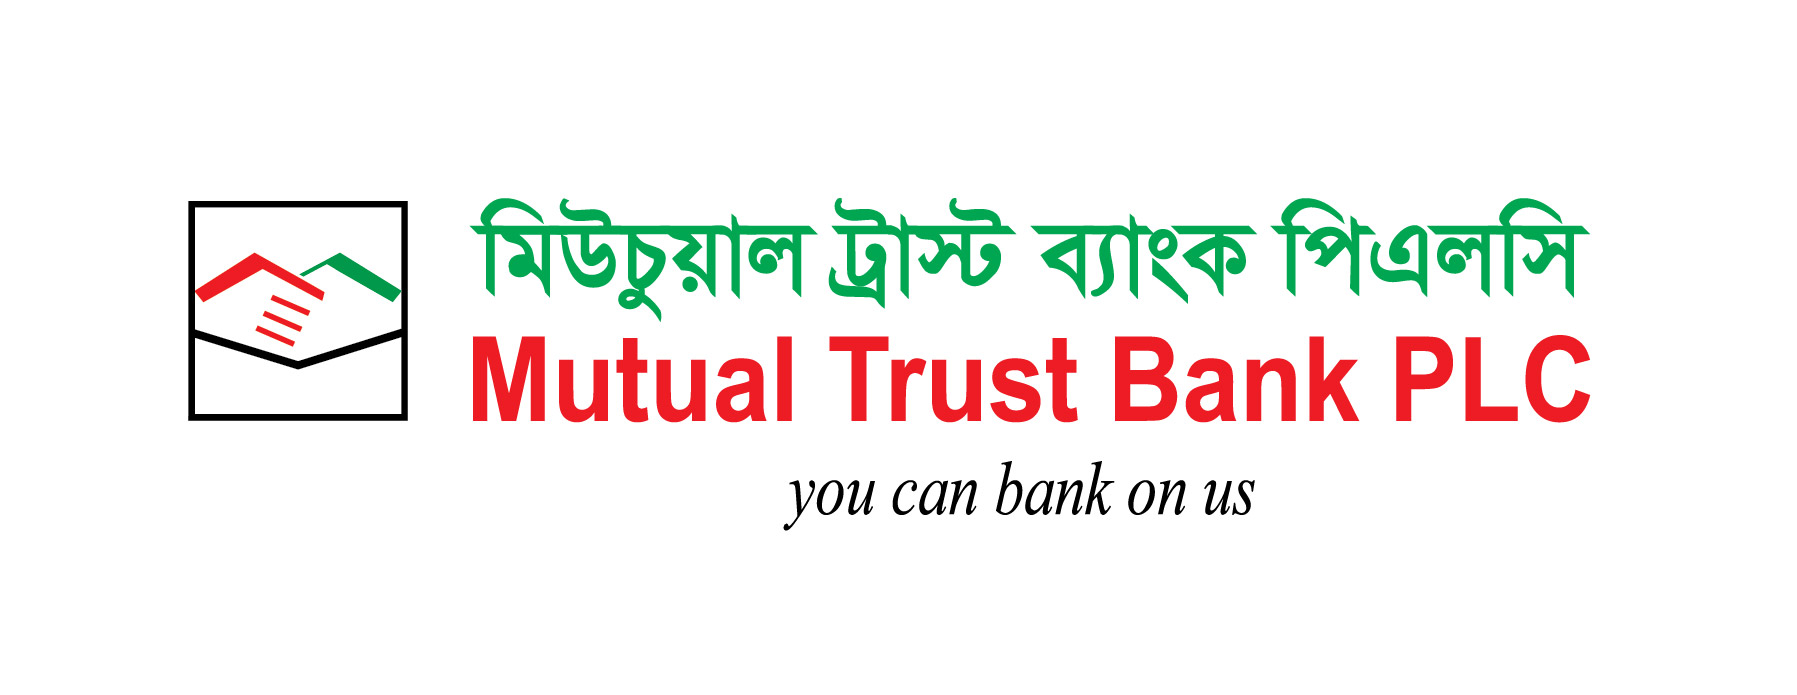 Mutual Trust Bank PLC